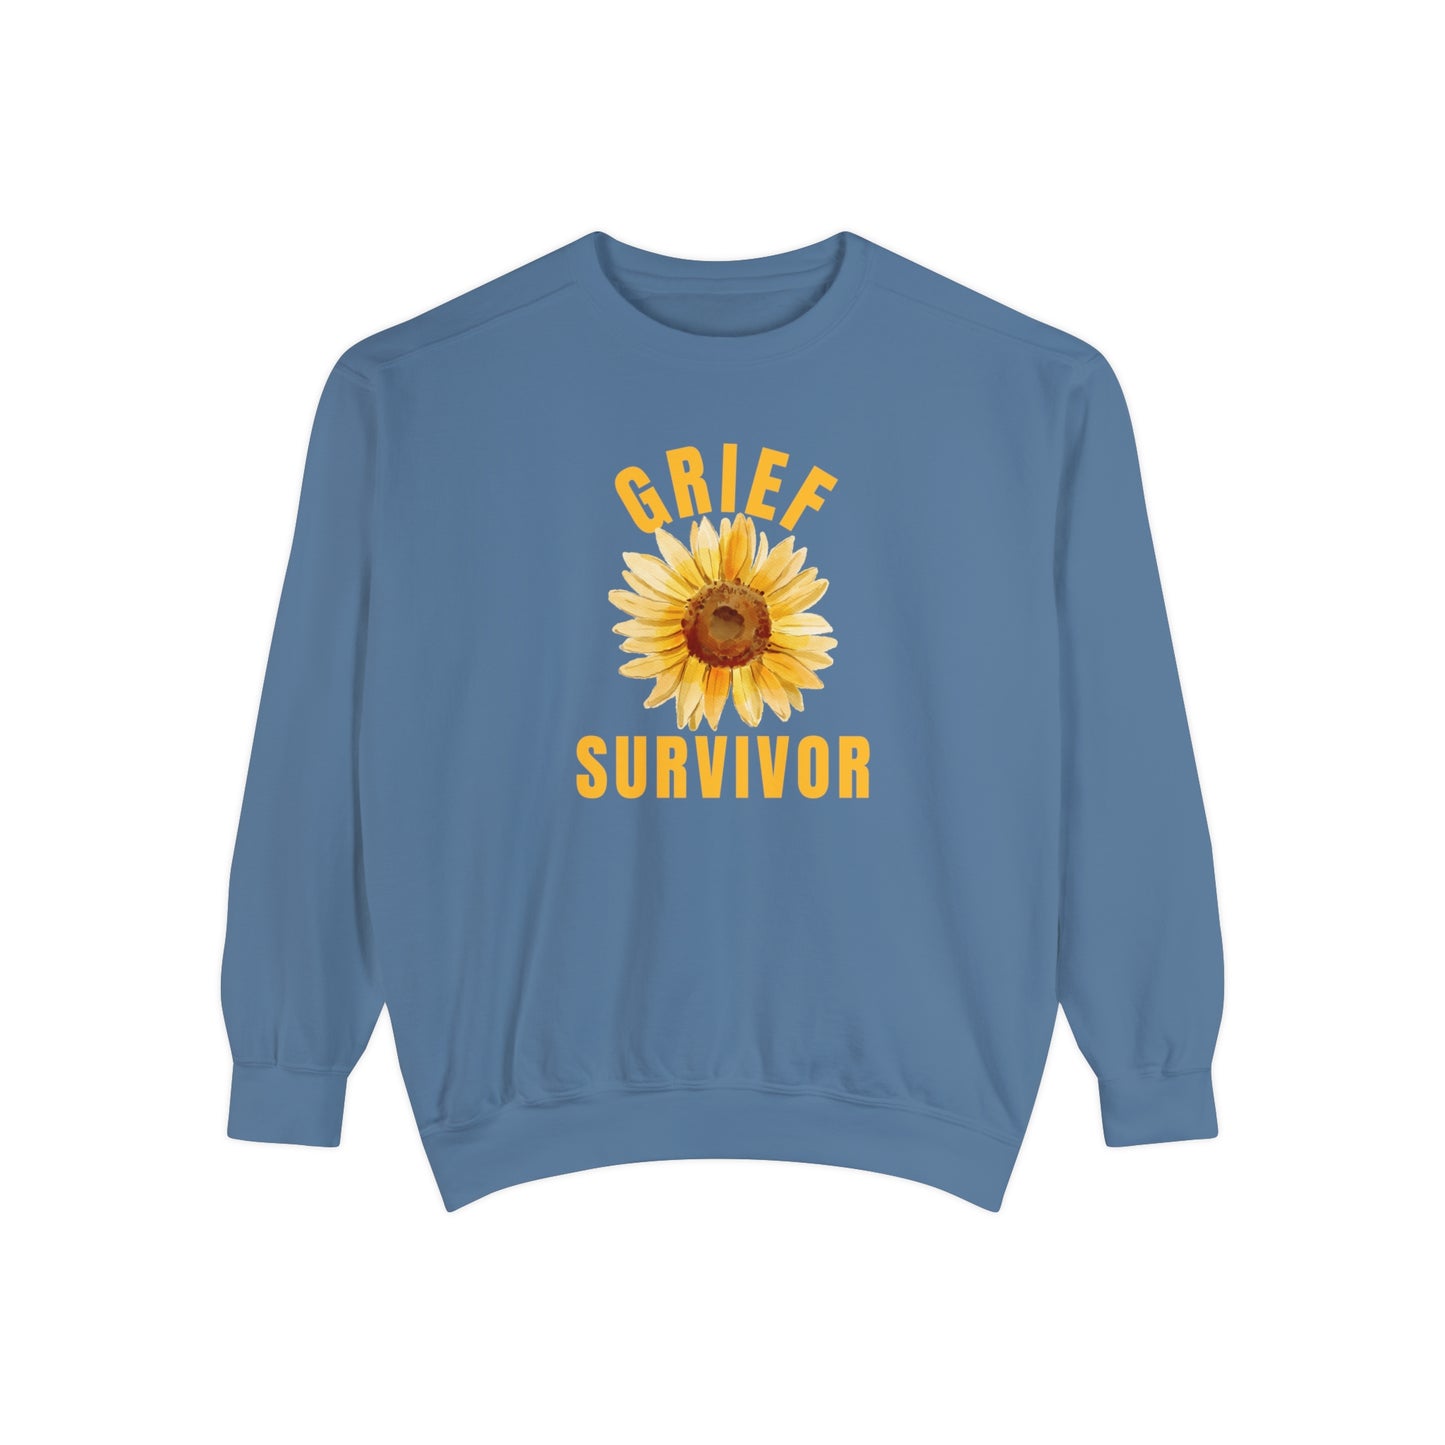 Blue Jean Gildan Comfort Colors Grief Survivor Sunflower Sweatshirt.